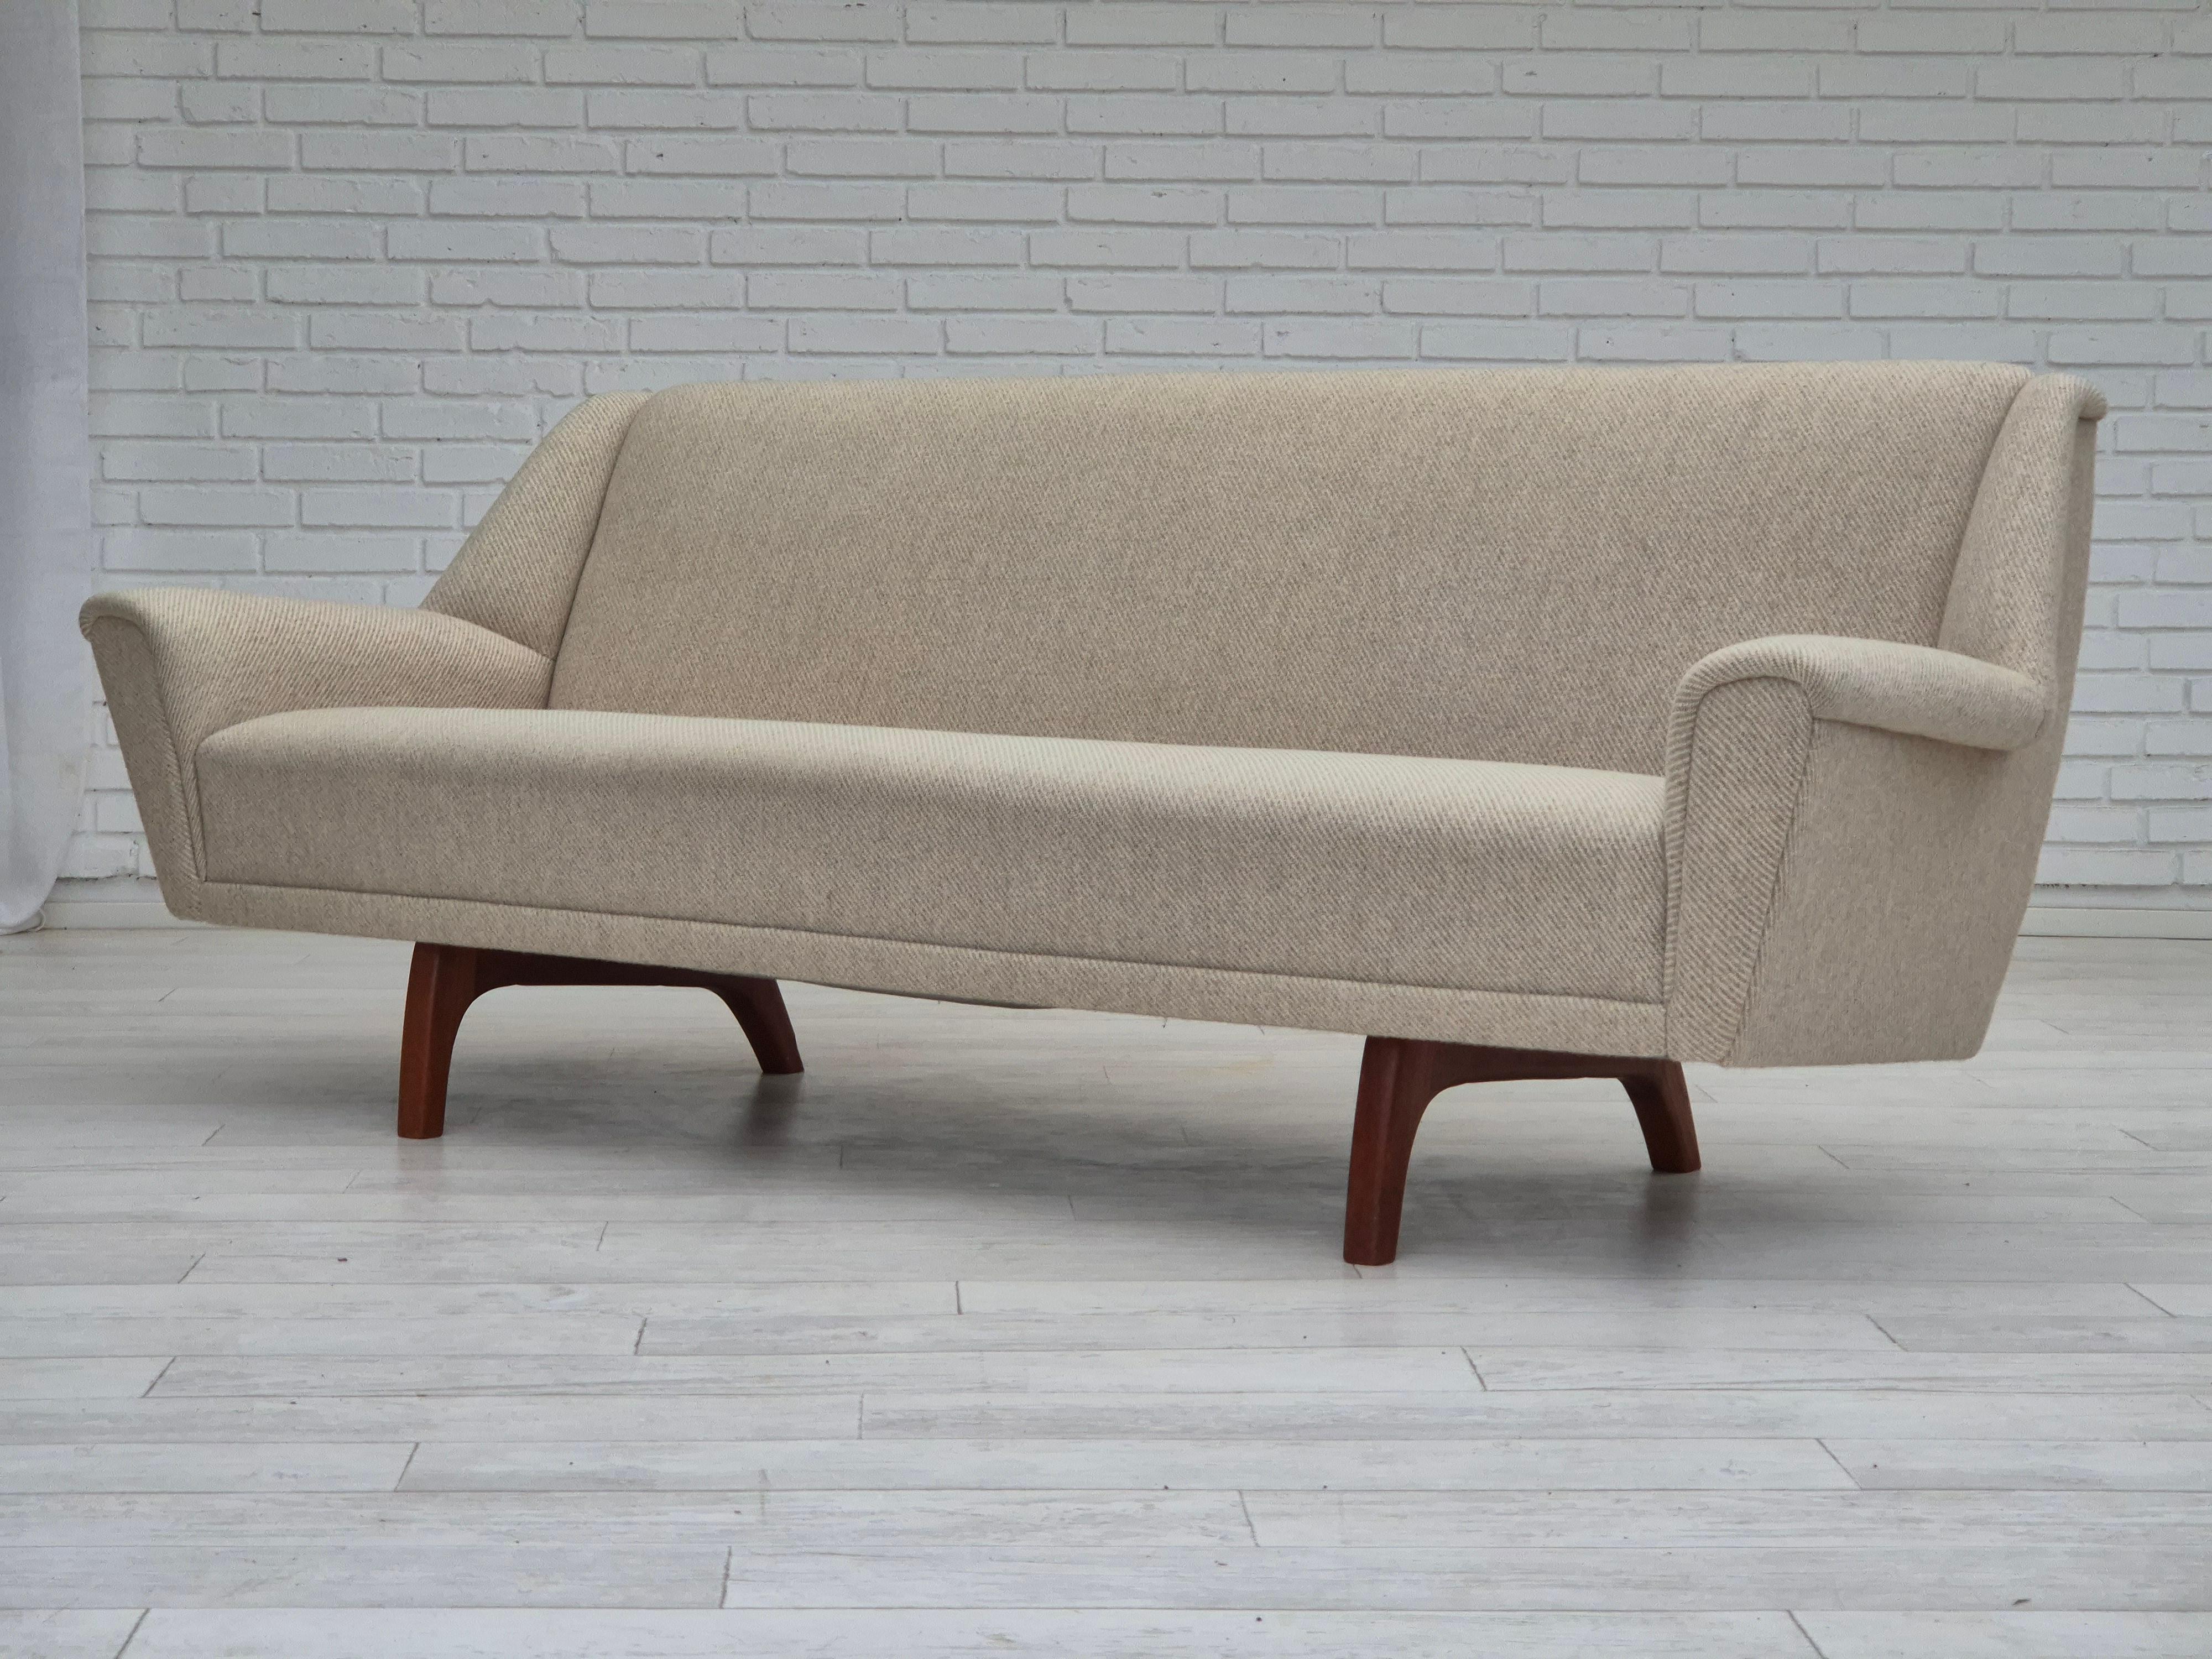 1970s, Danish 3 seater sofa, original condition, wool, teak wood. 2